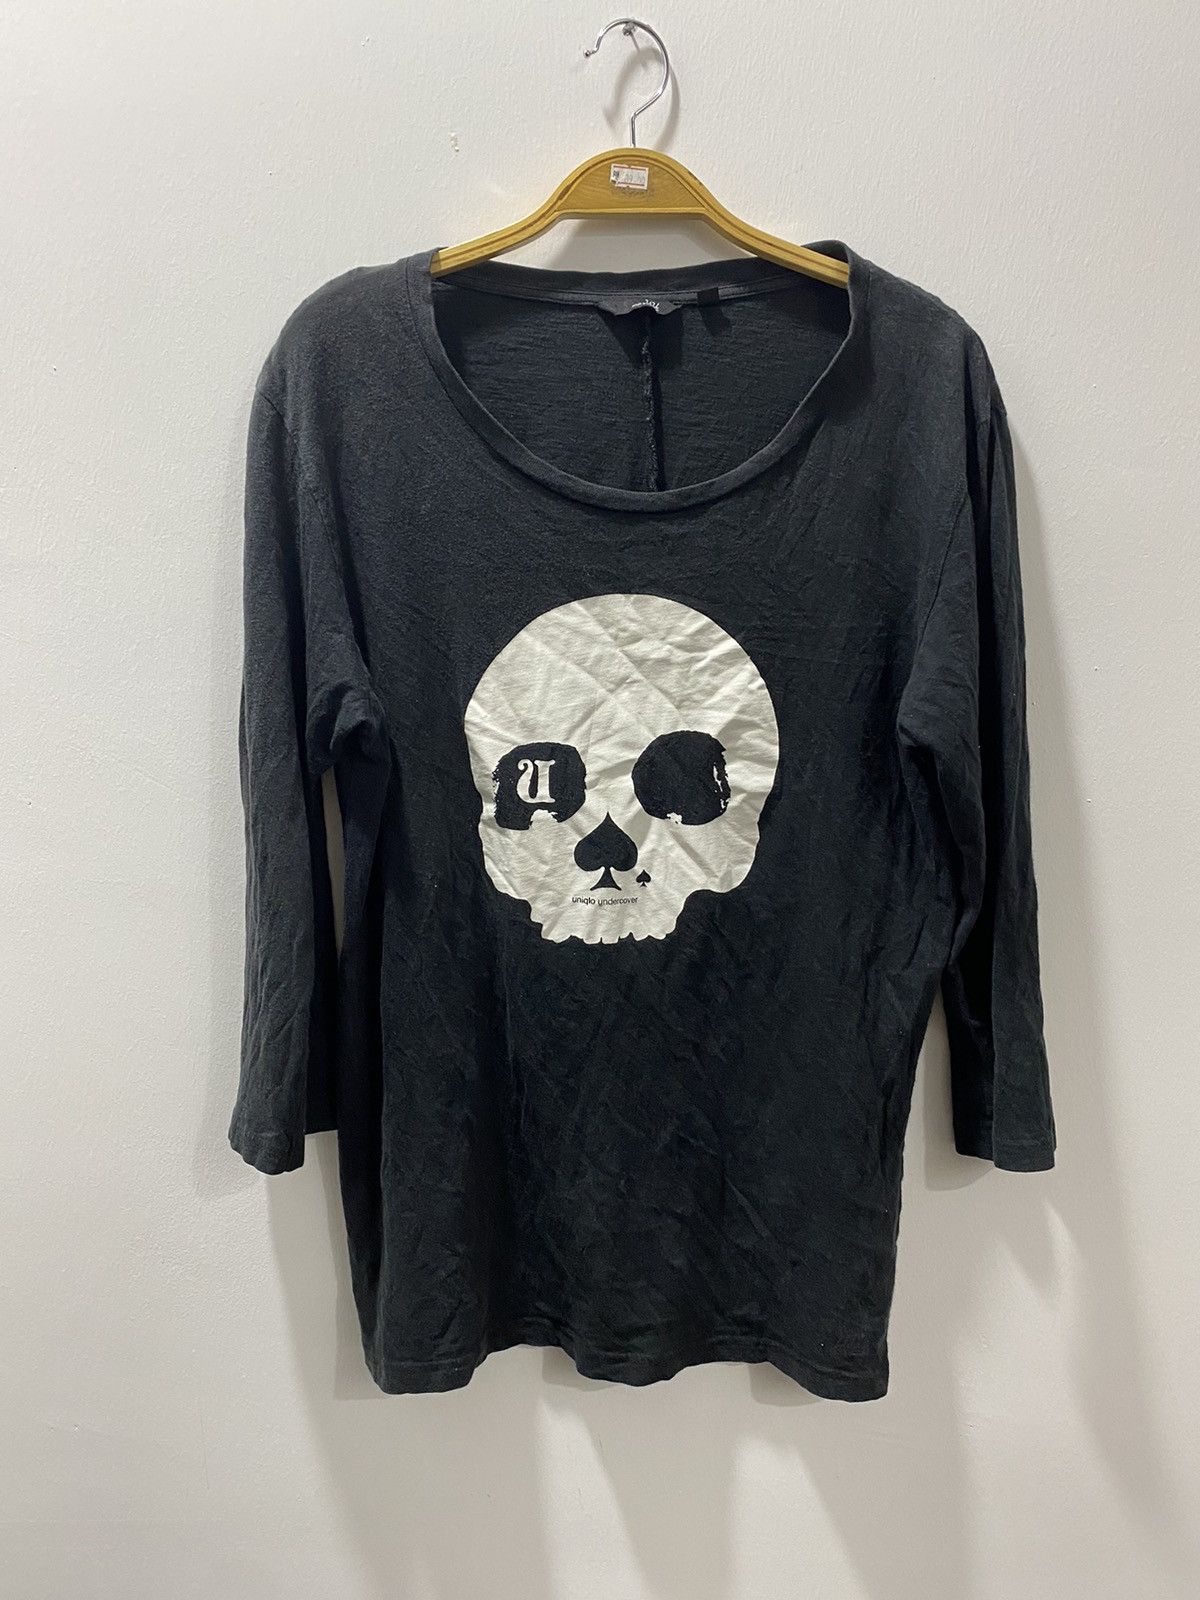 SS12 Undercover x Uniqlo Skull Shirt - 5